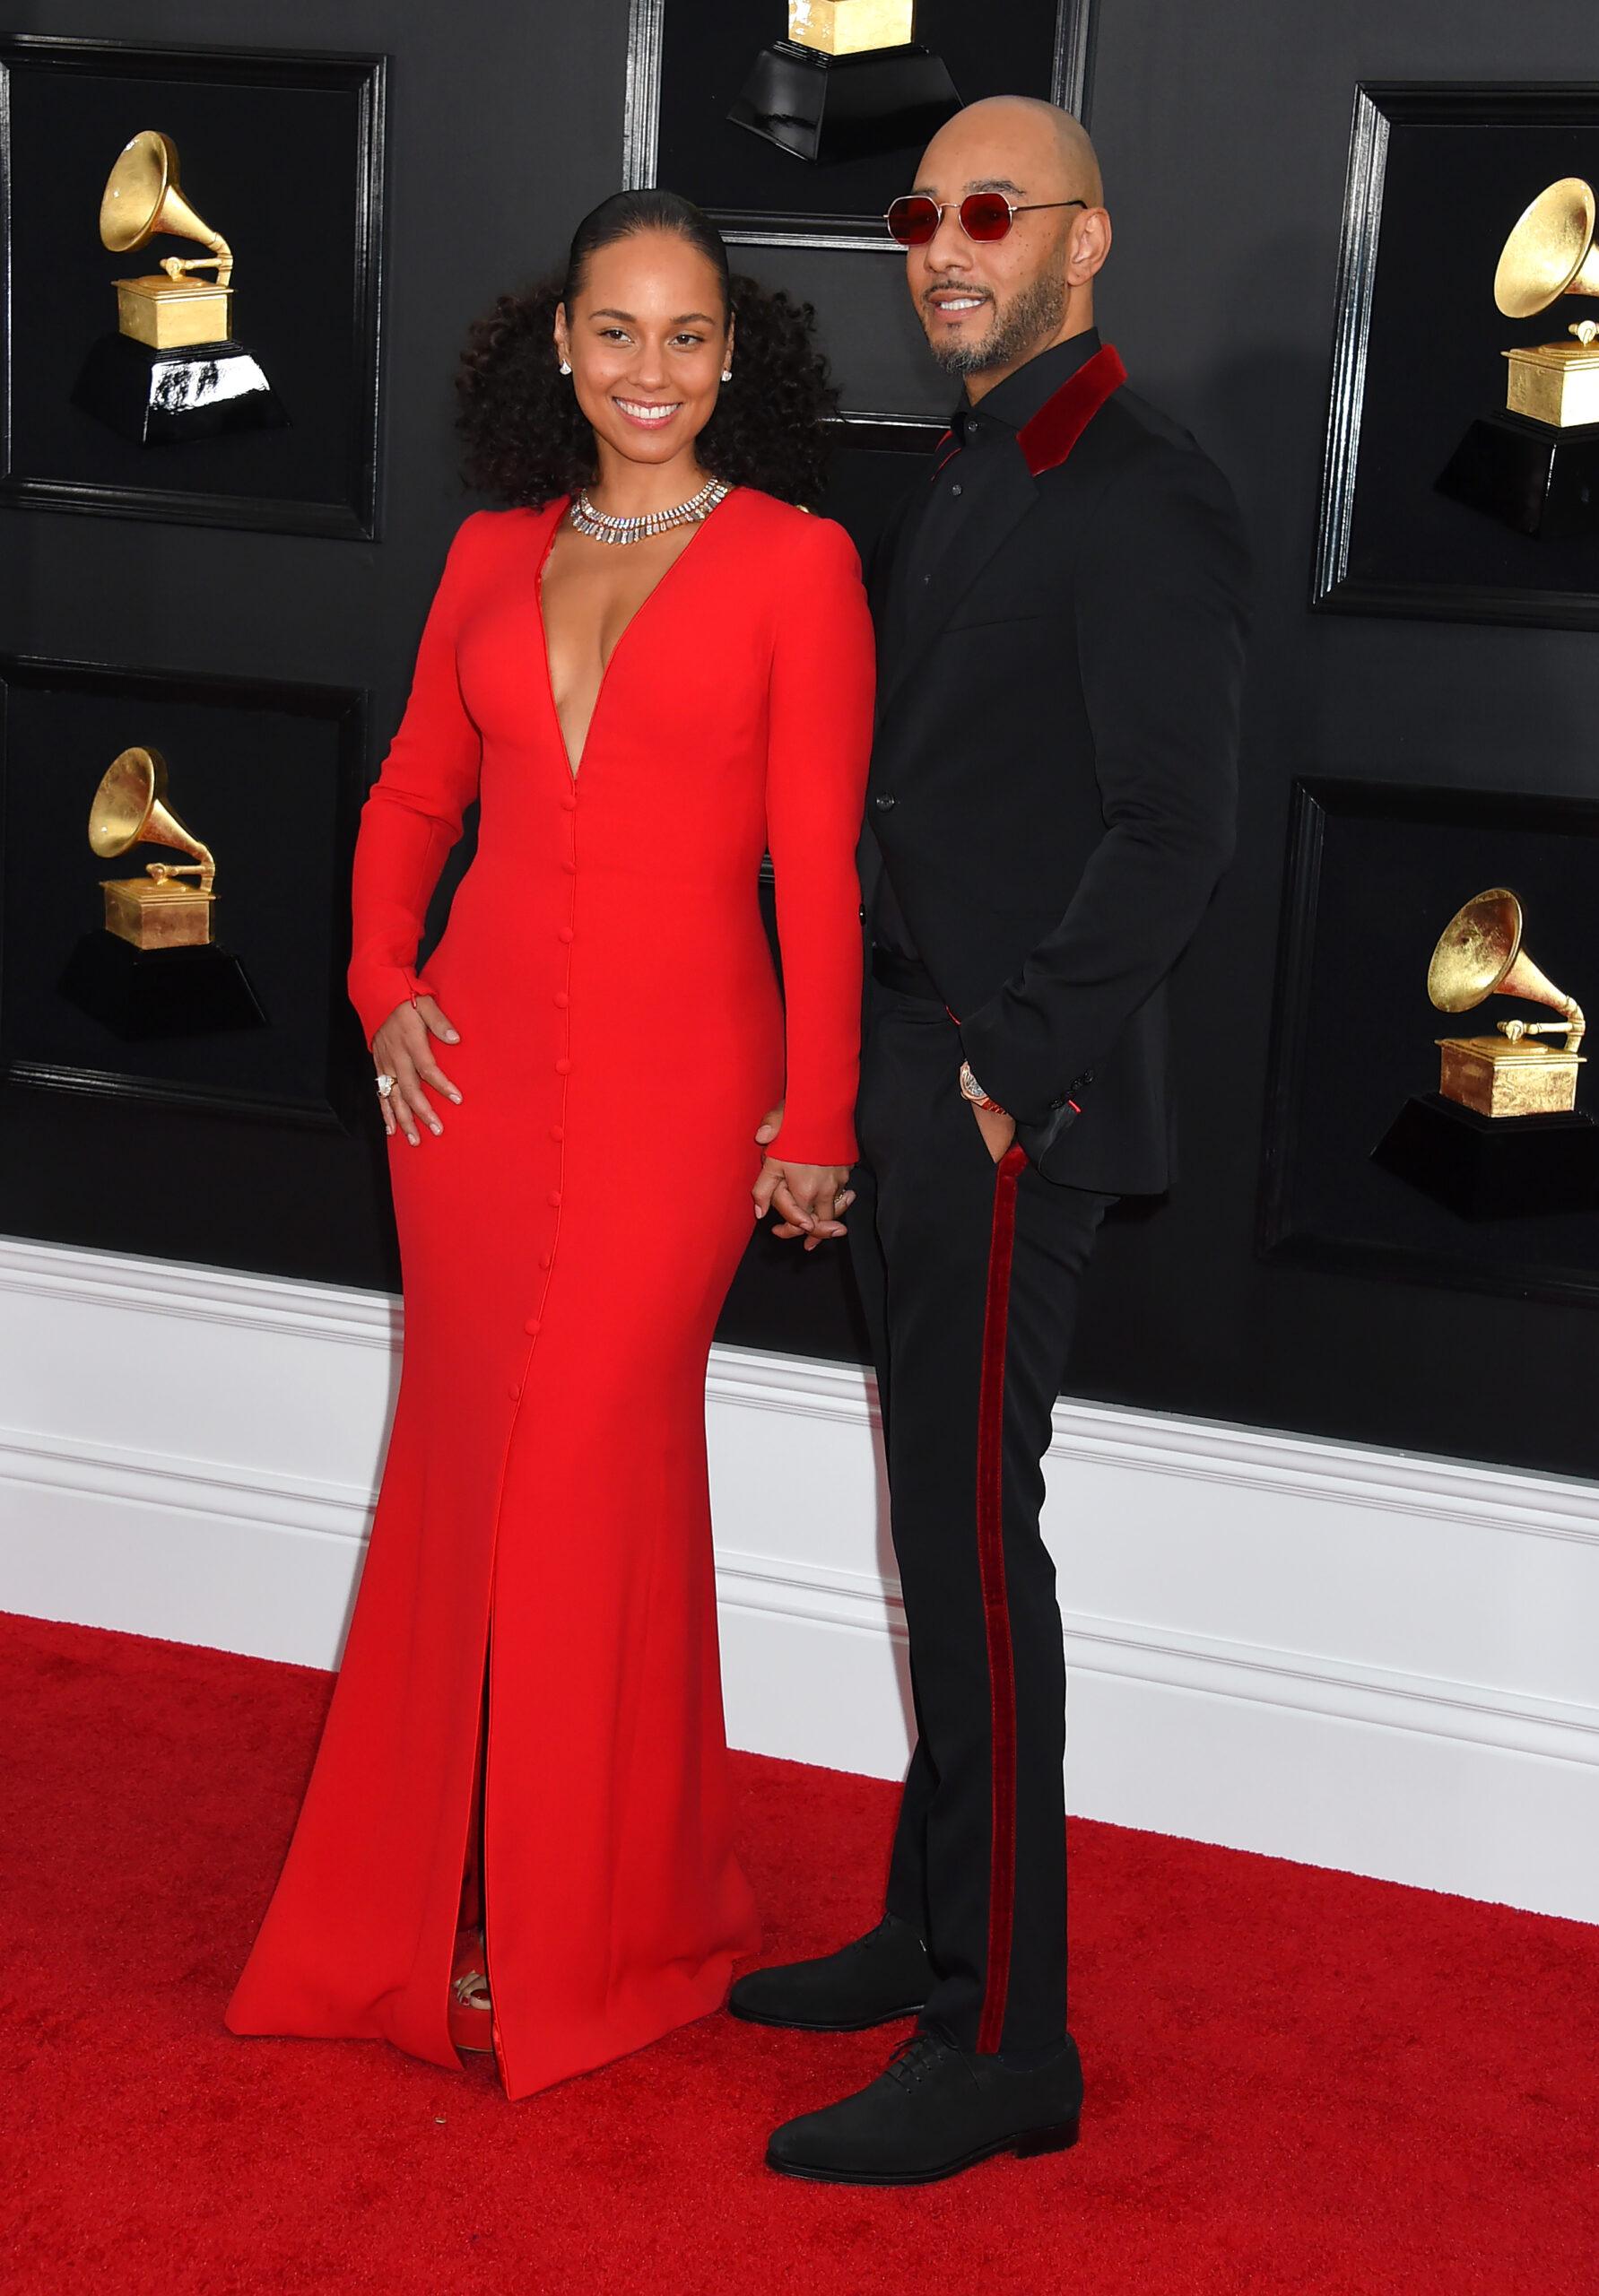 Swizz Beatz and Alicia Keys at the Grammy Awards 2019